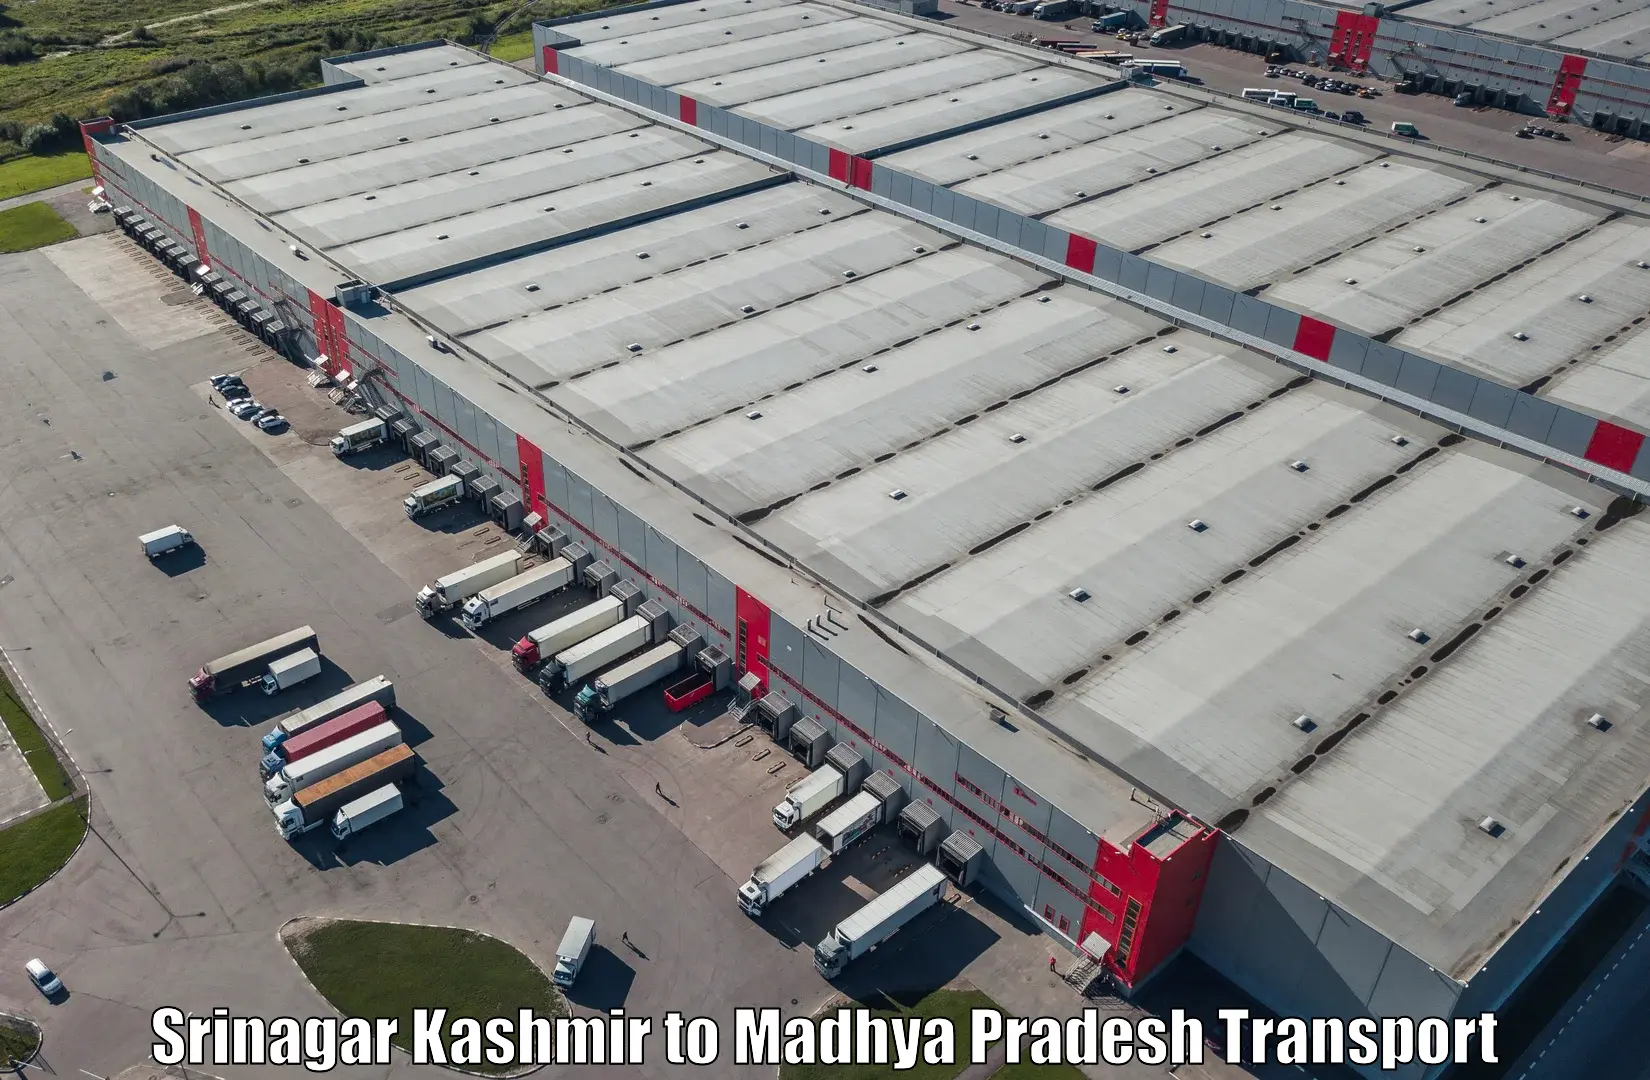 Furniture transport service Srinagar Kashmir to BHEL Bhopal